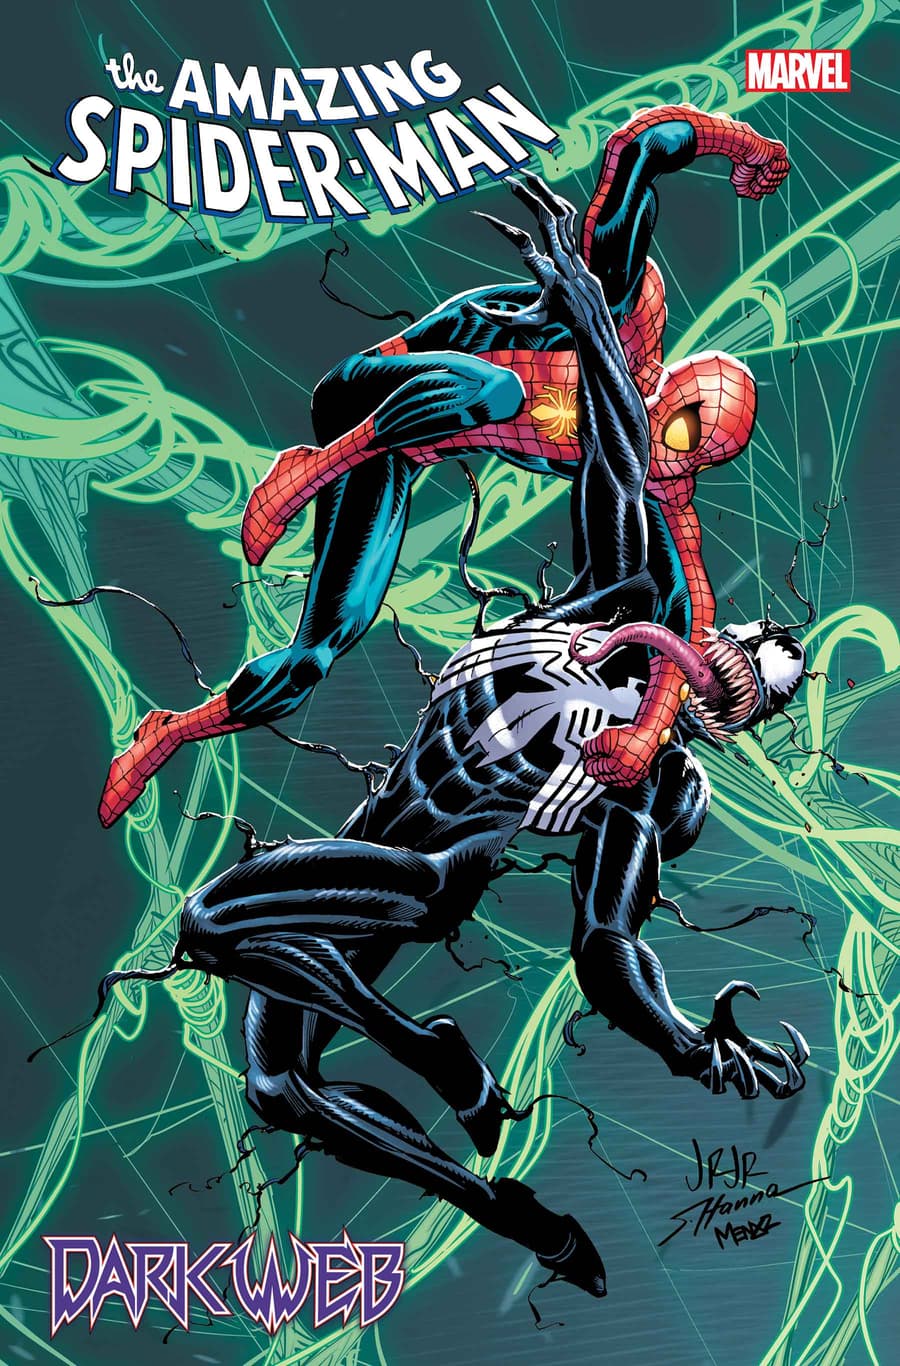 Amazing Spider-Man #15 Cover by JOHN ROMITA JR.